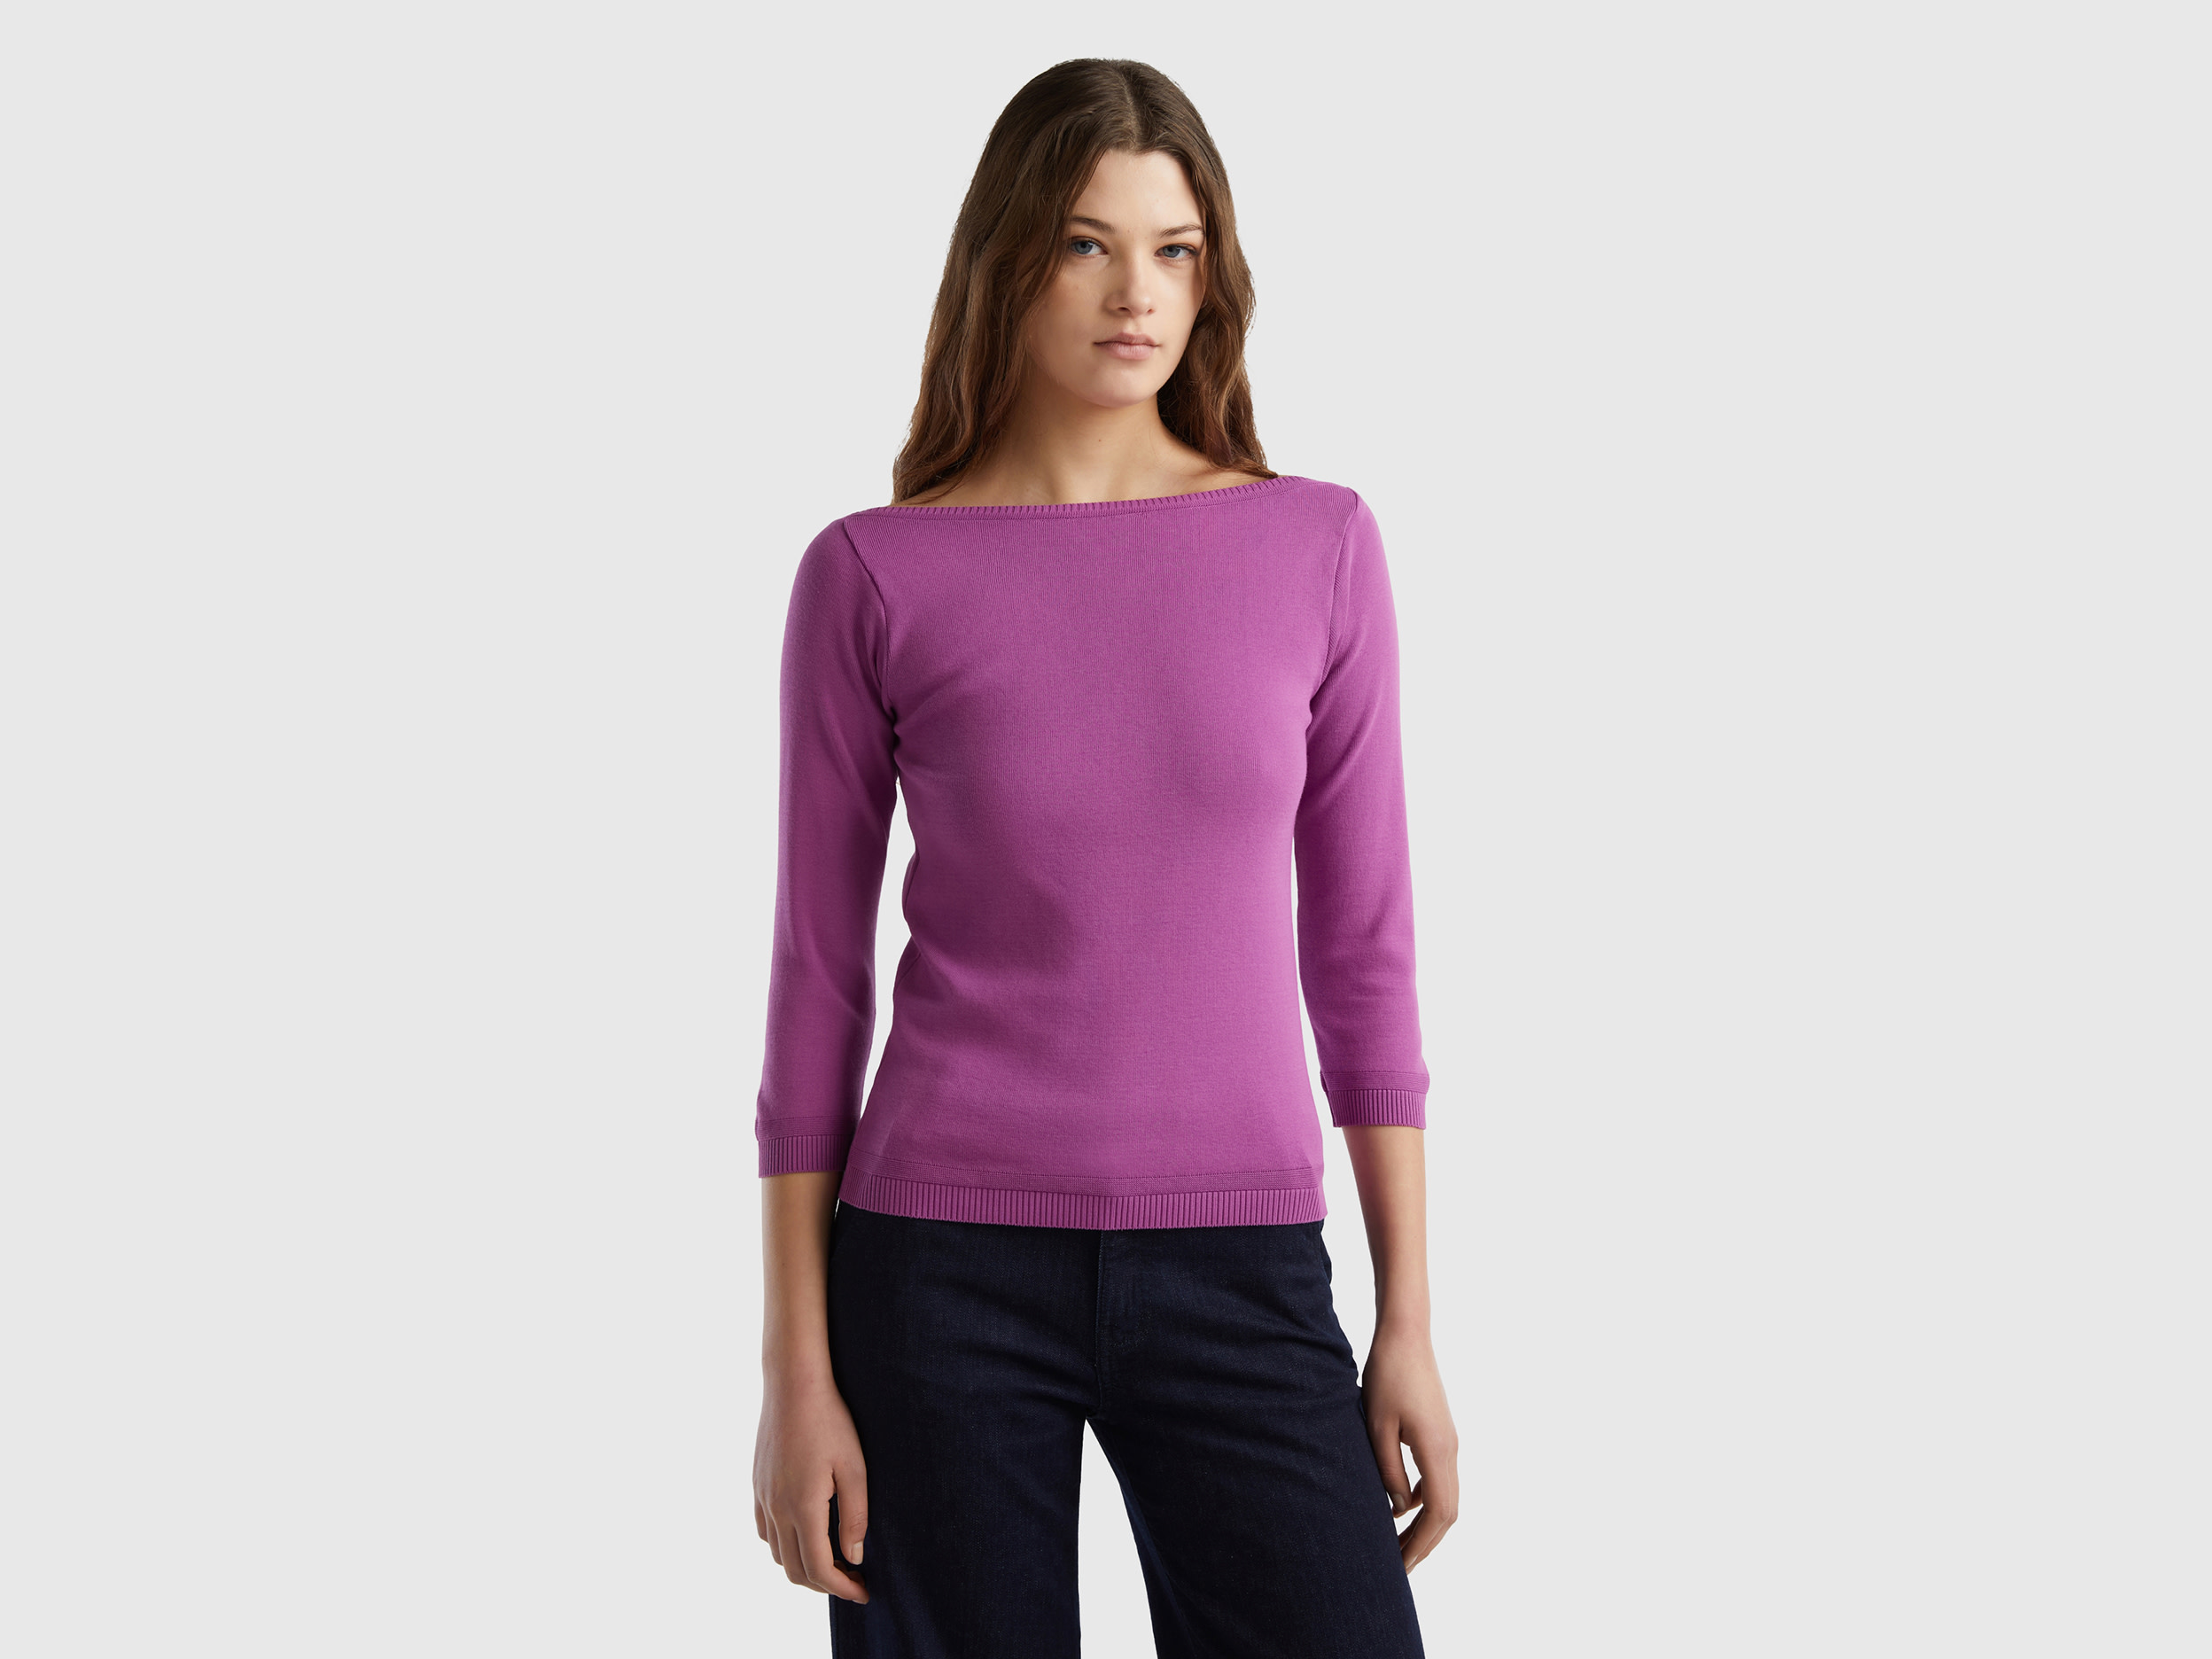 Benetton, 100% Cotton Boat Neck Sweater, size M, Violet, Women